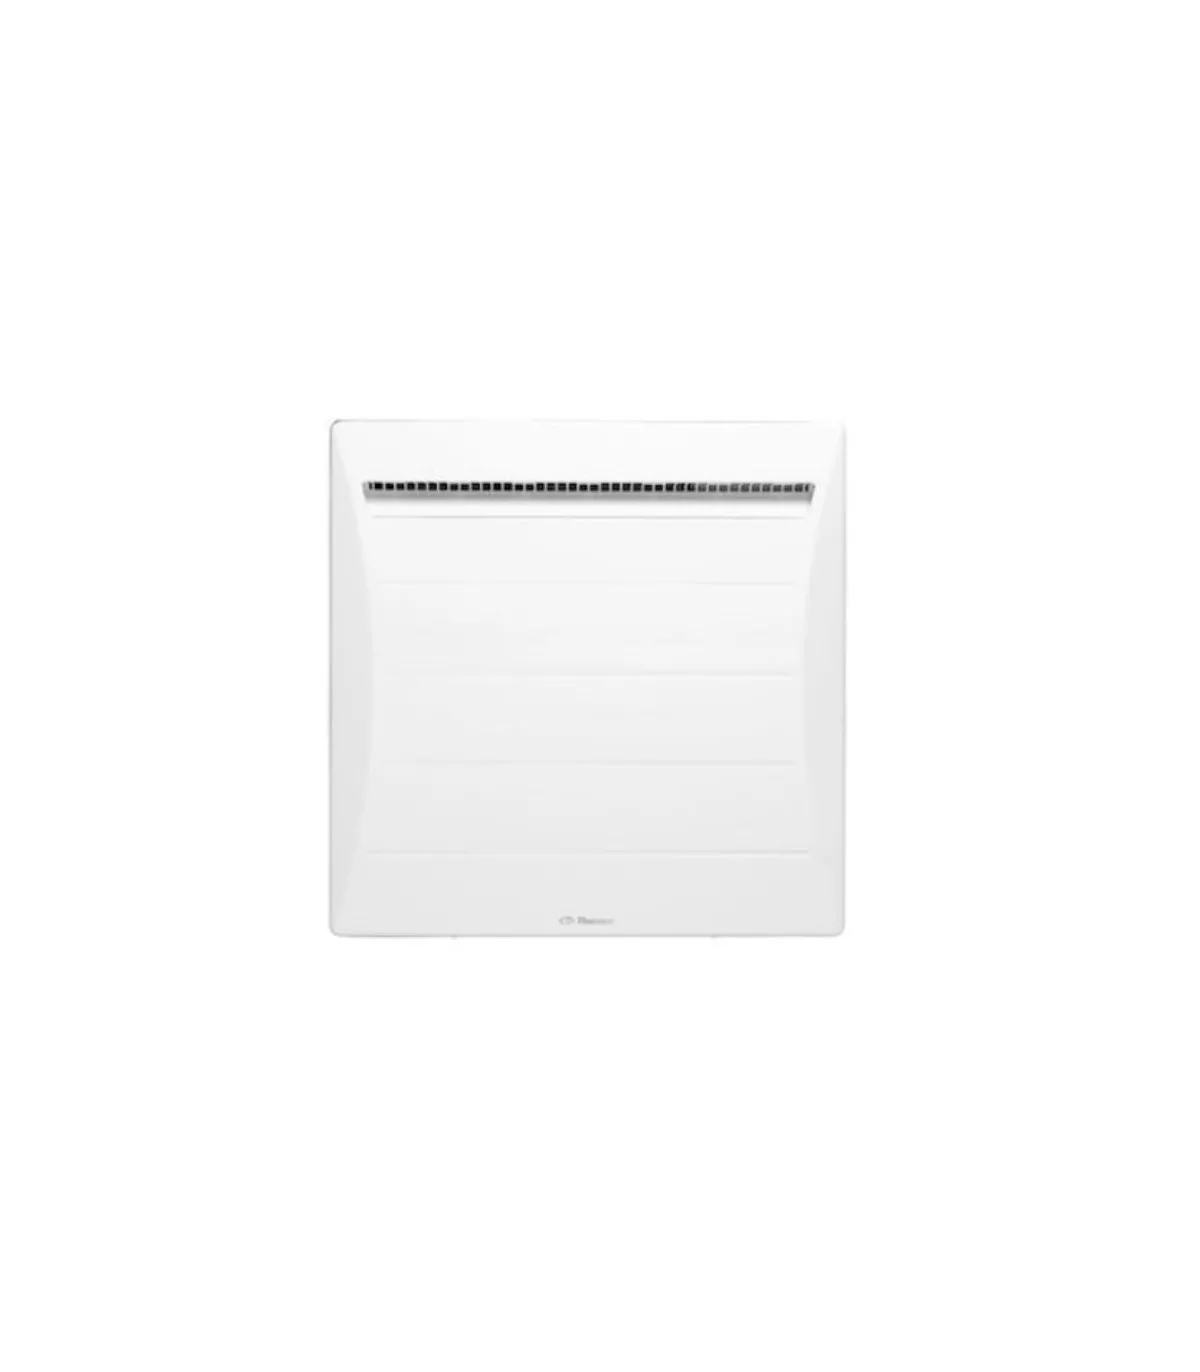 Radiateur Mozart digital vertical blanc 1500 w - Thermor